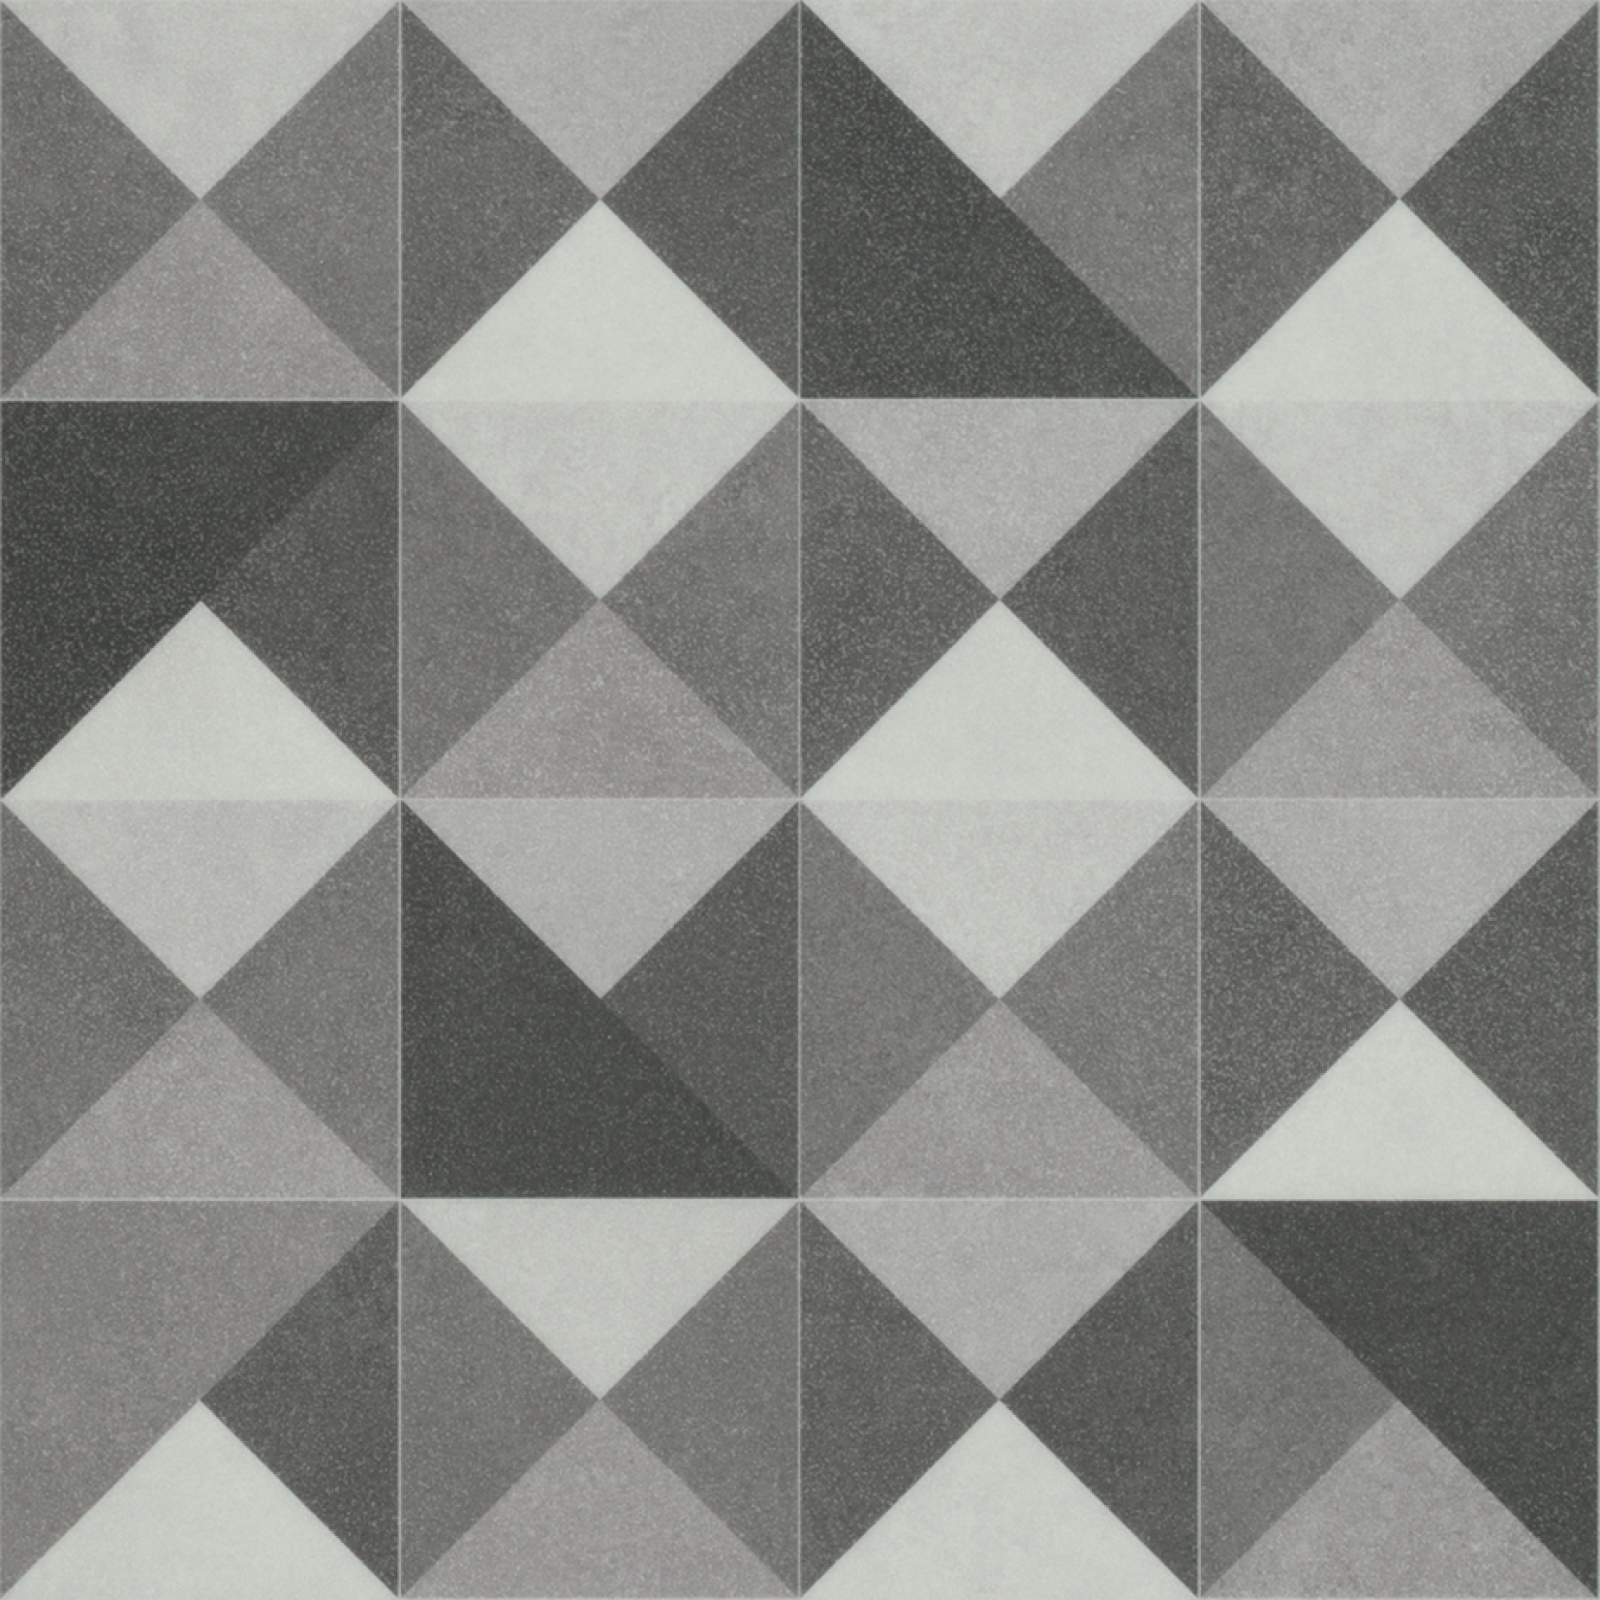 Vzor - 17842 speckled concrete tile